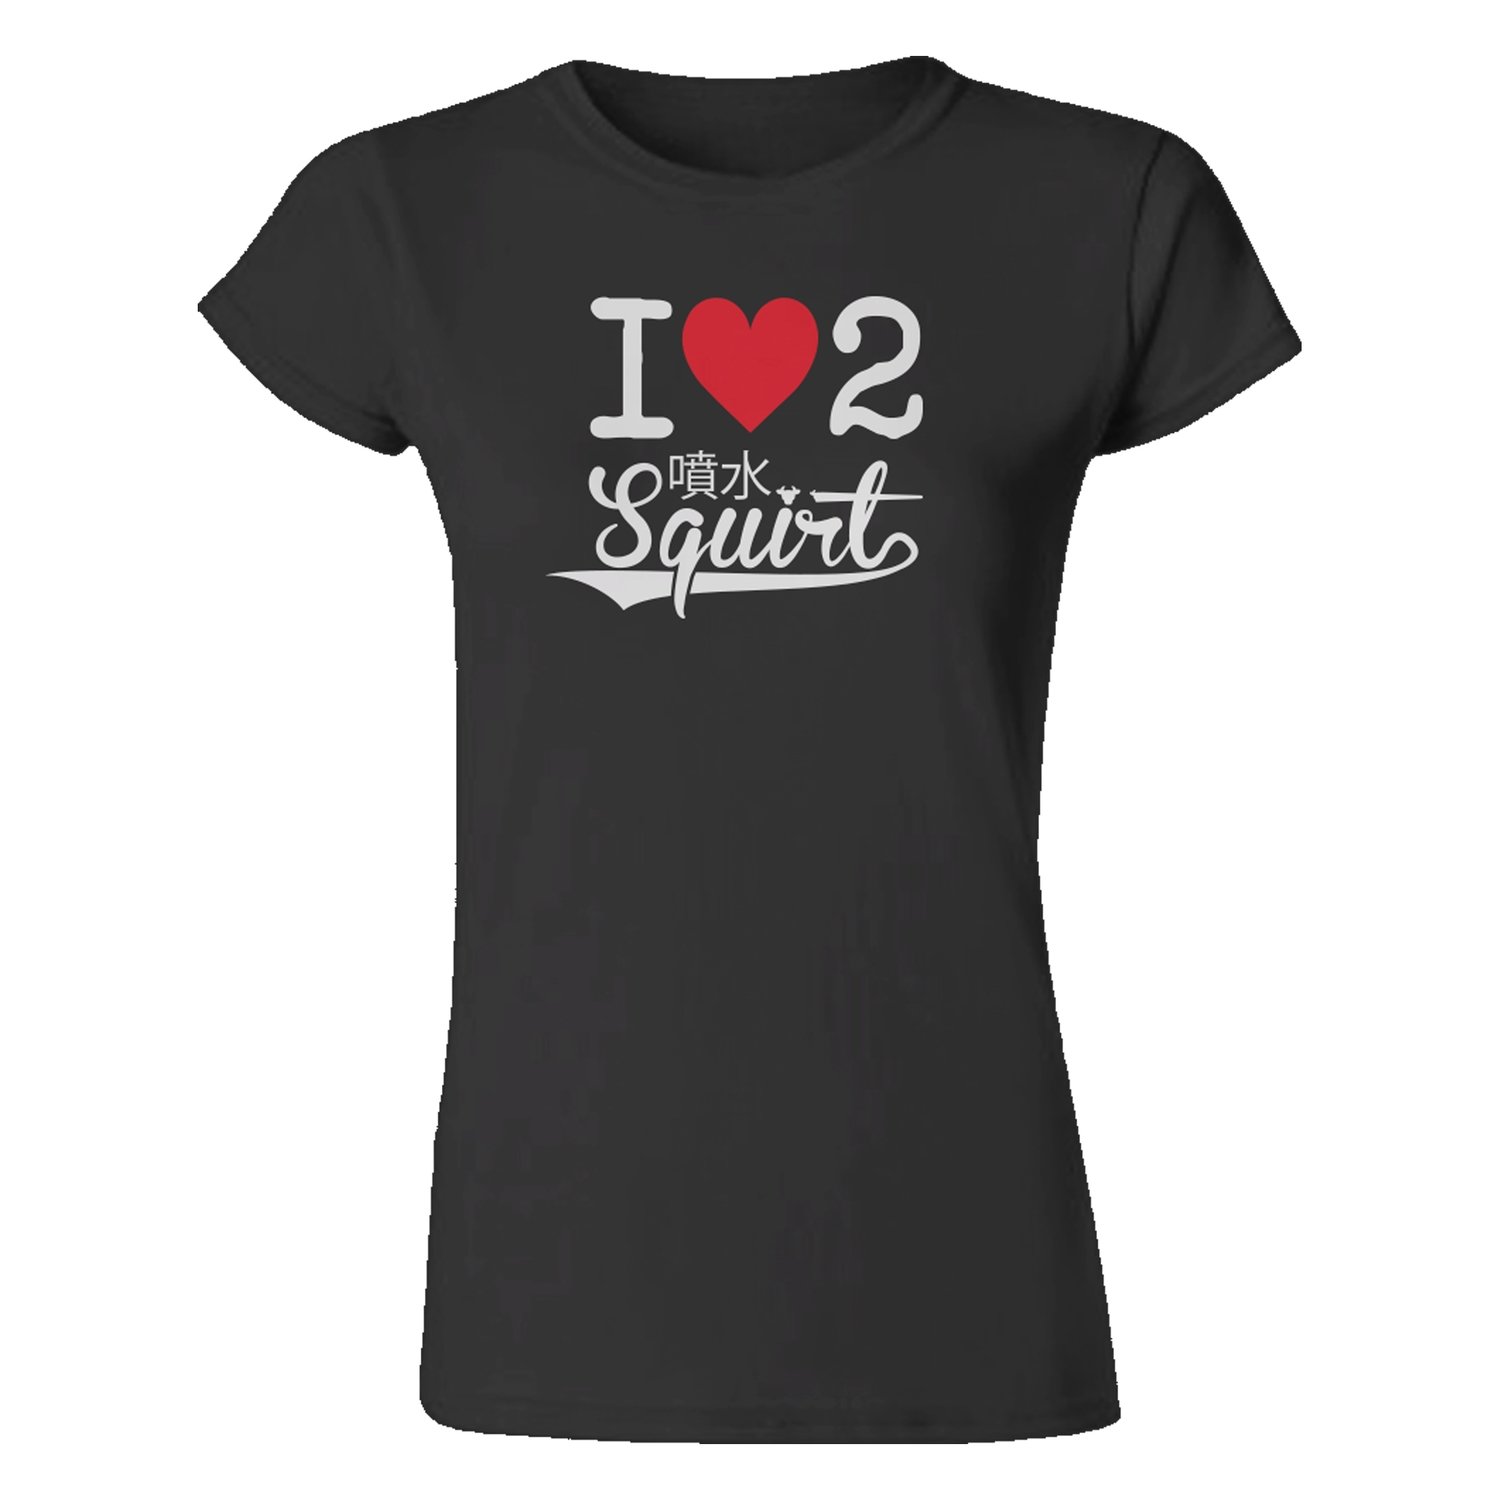 Female 'I Love 2 Squirt' T-Shirt